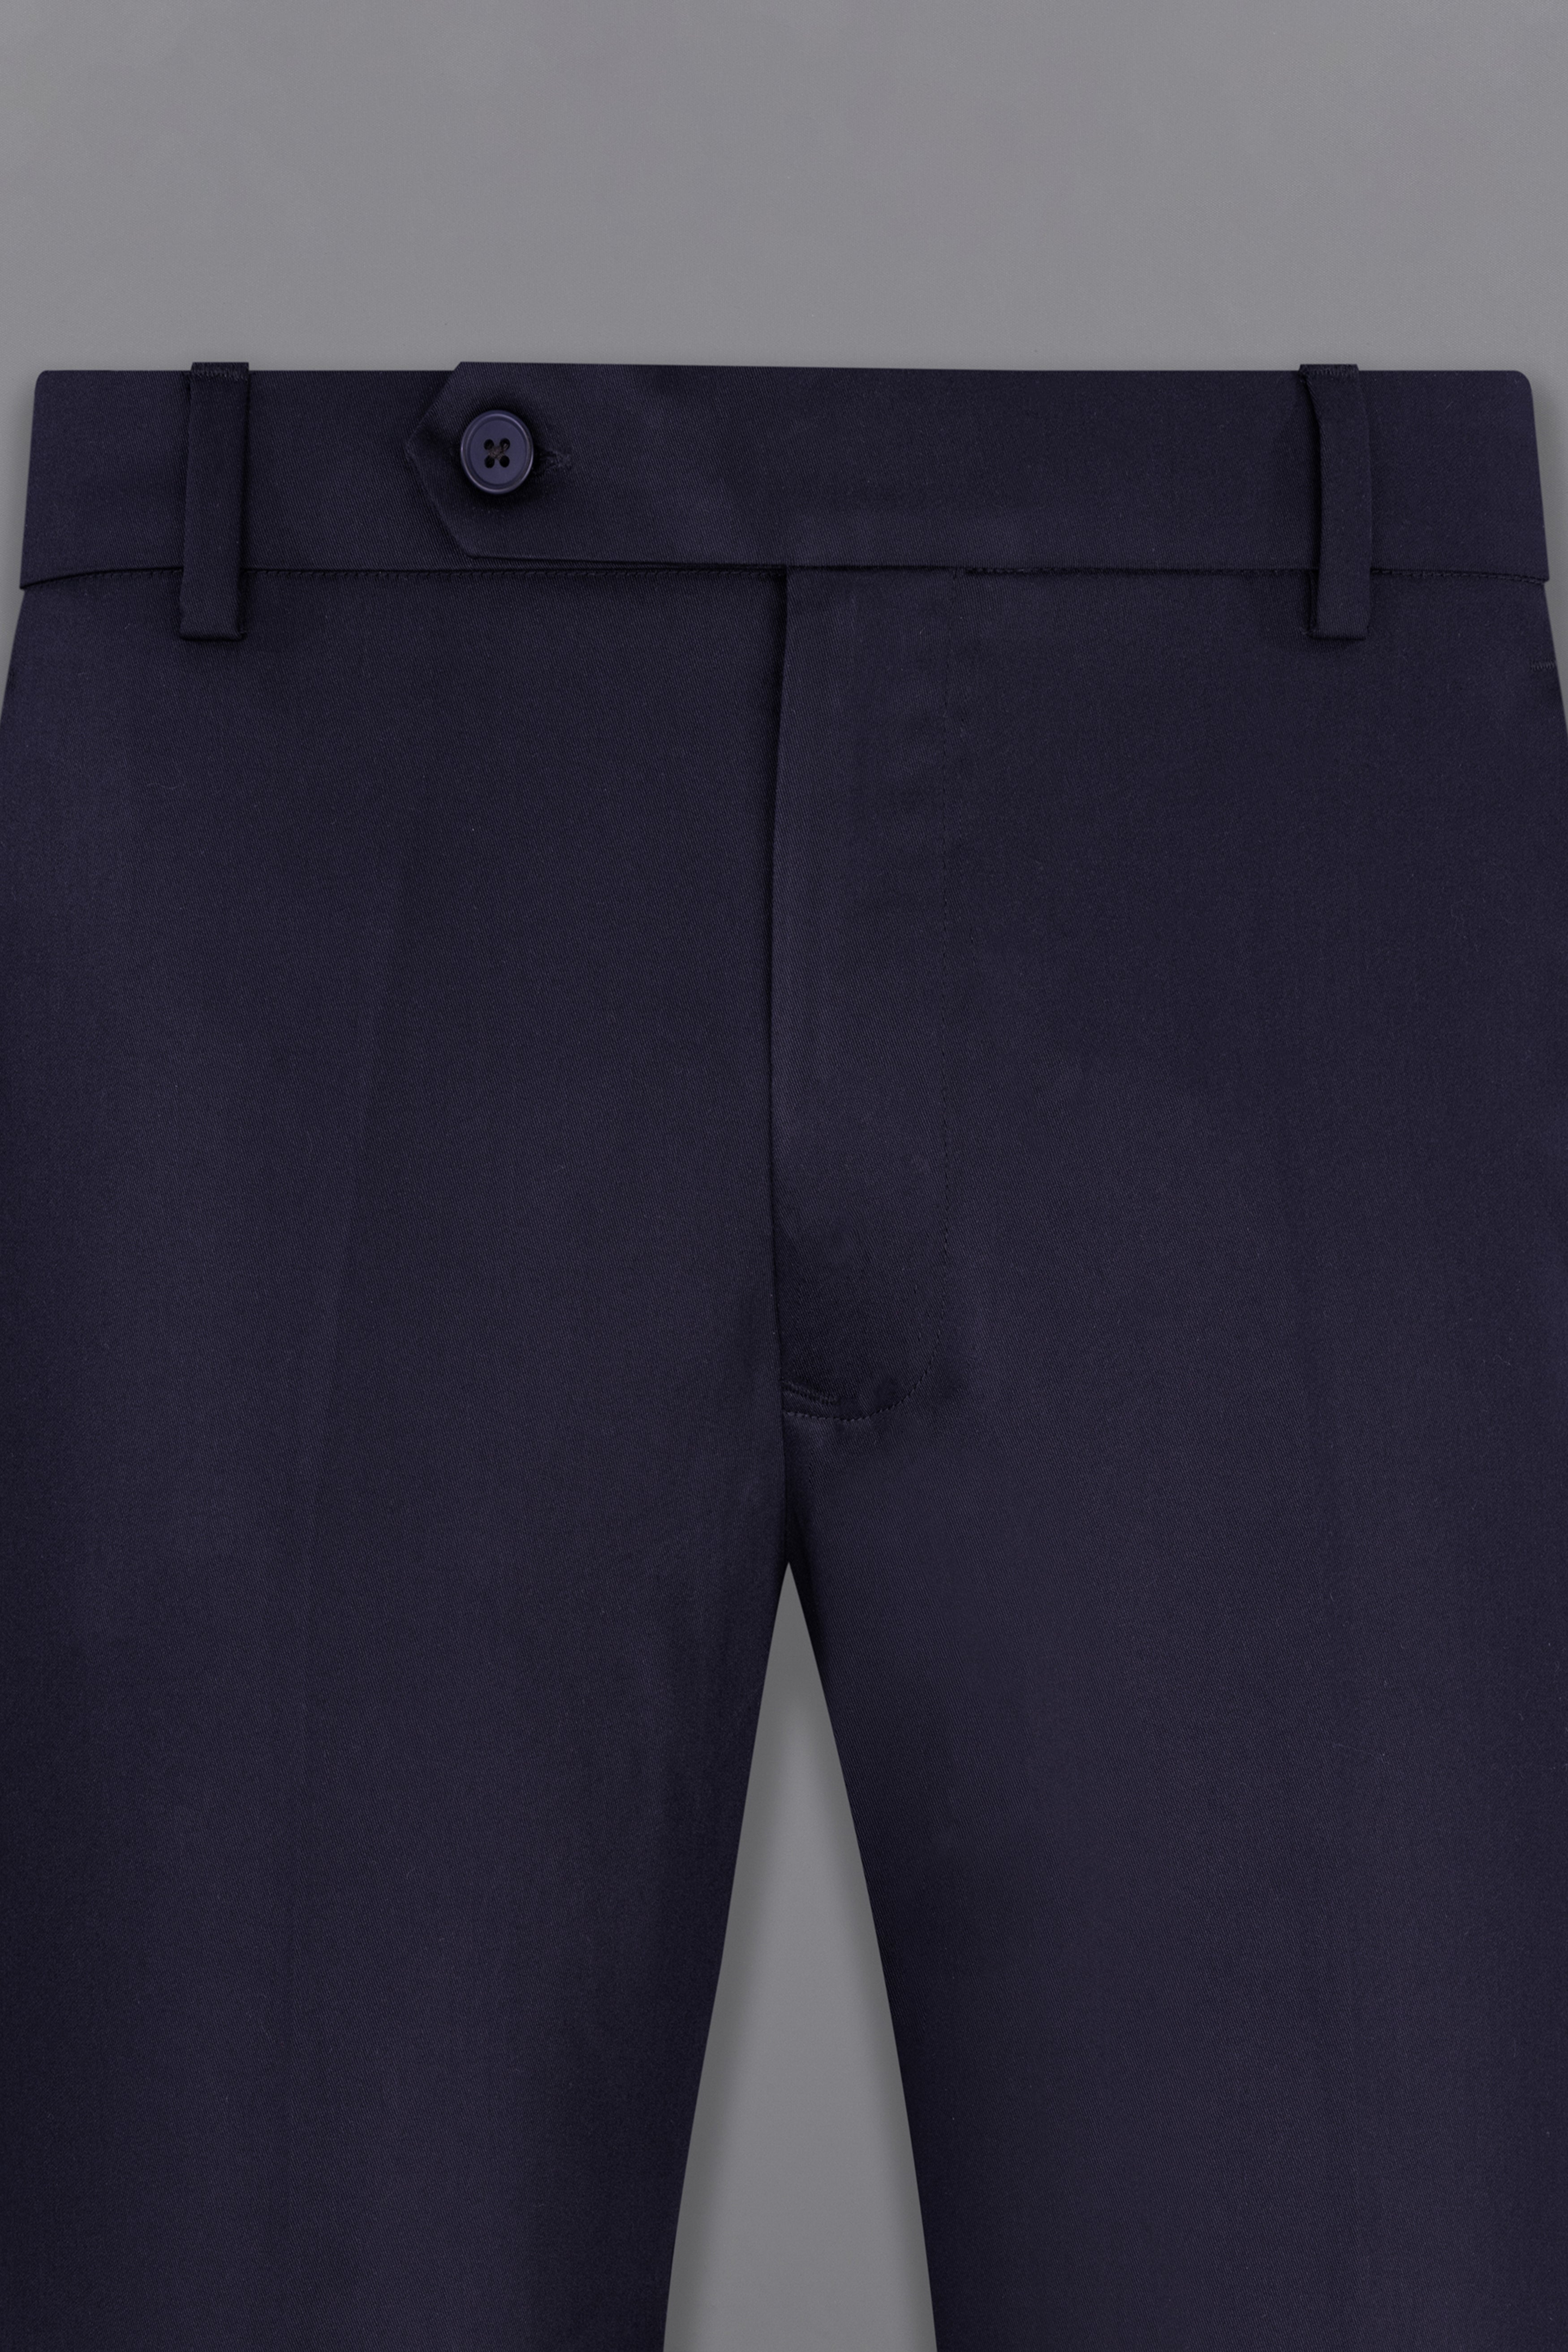 Mirage Navy Blue Textured Pant